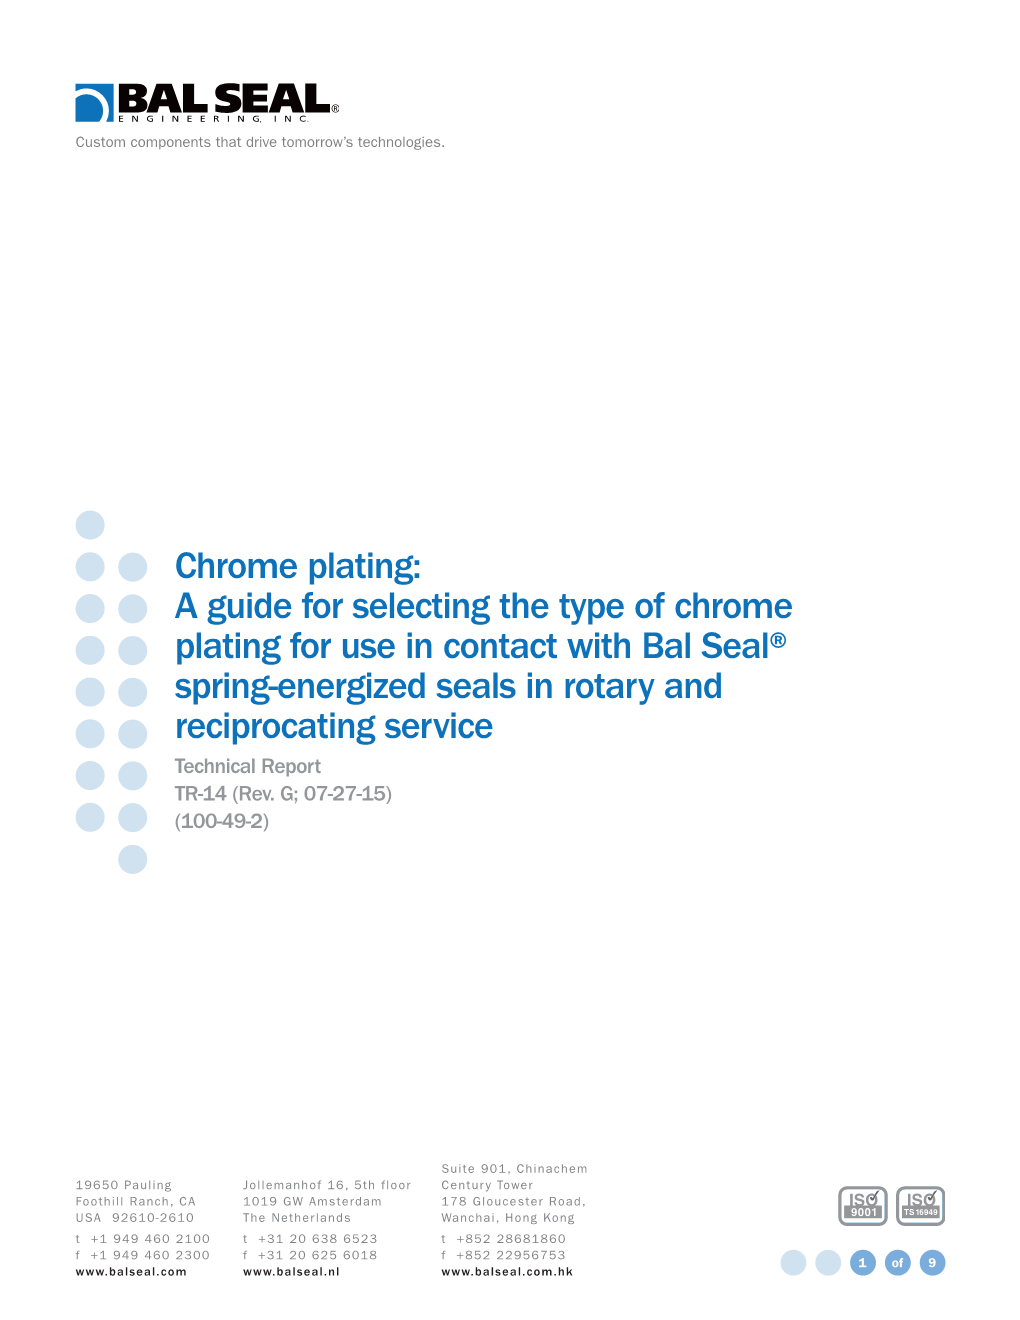 Chrome Plating